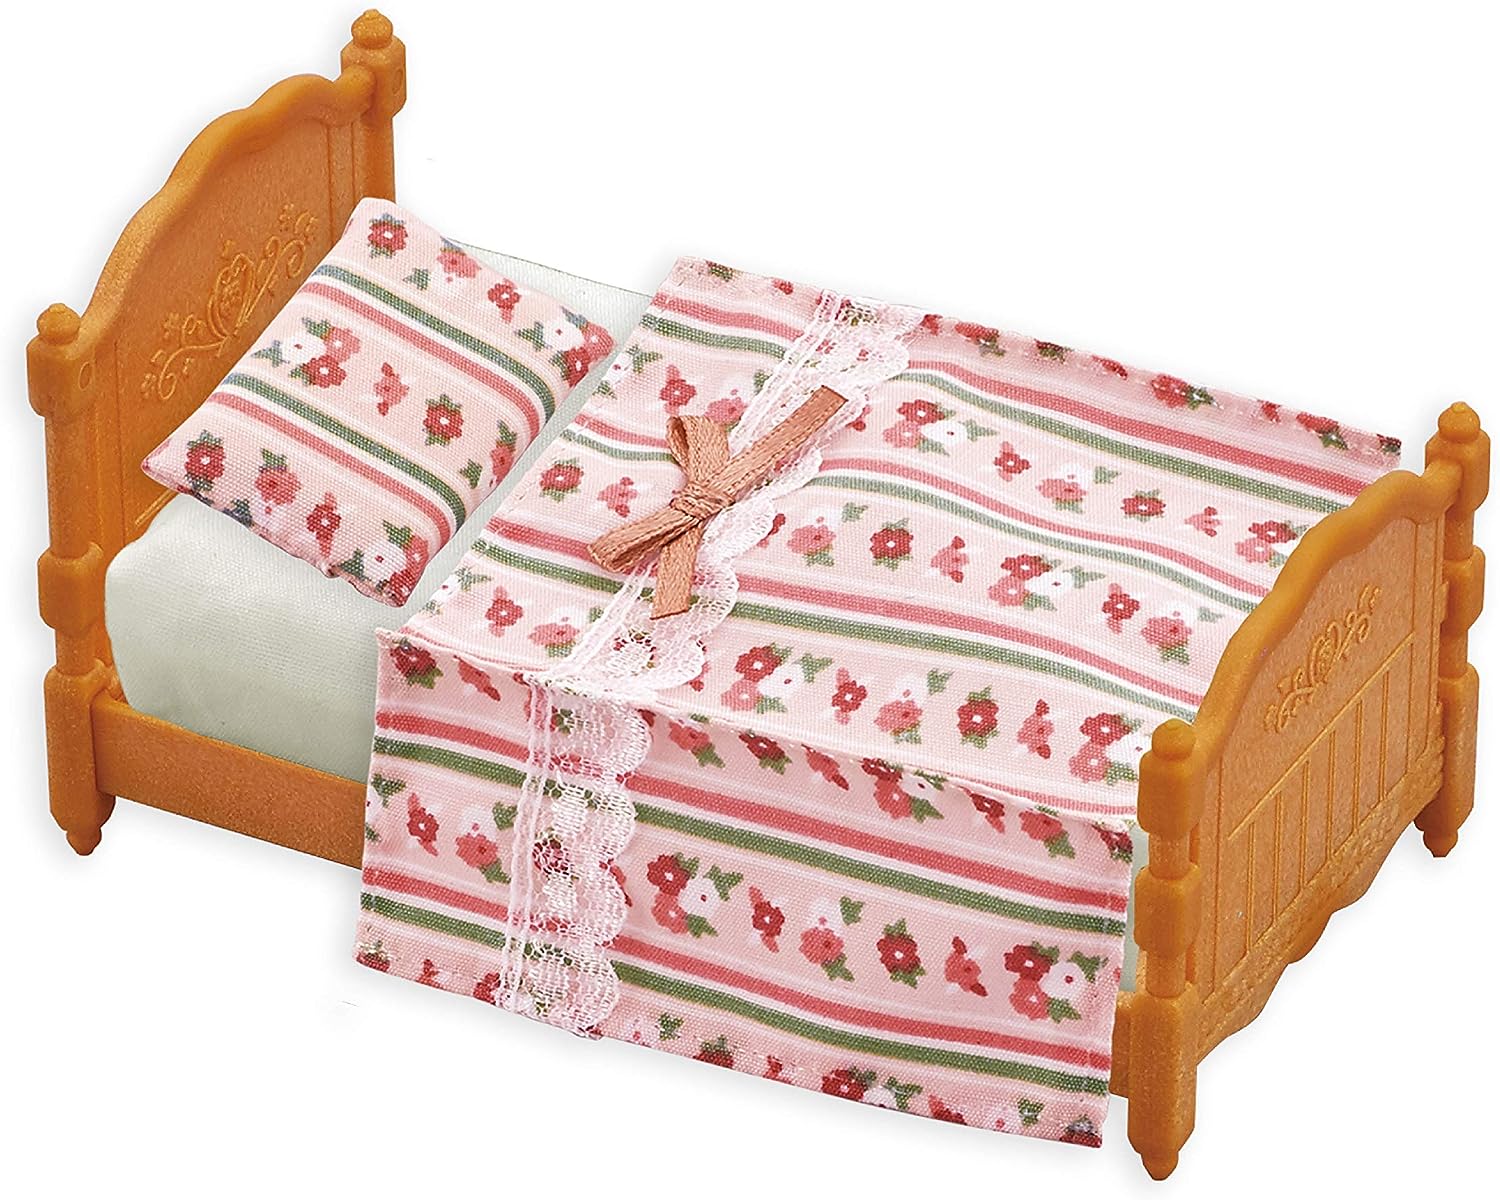 Bed & Comforter Set